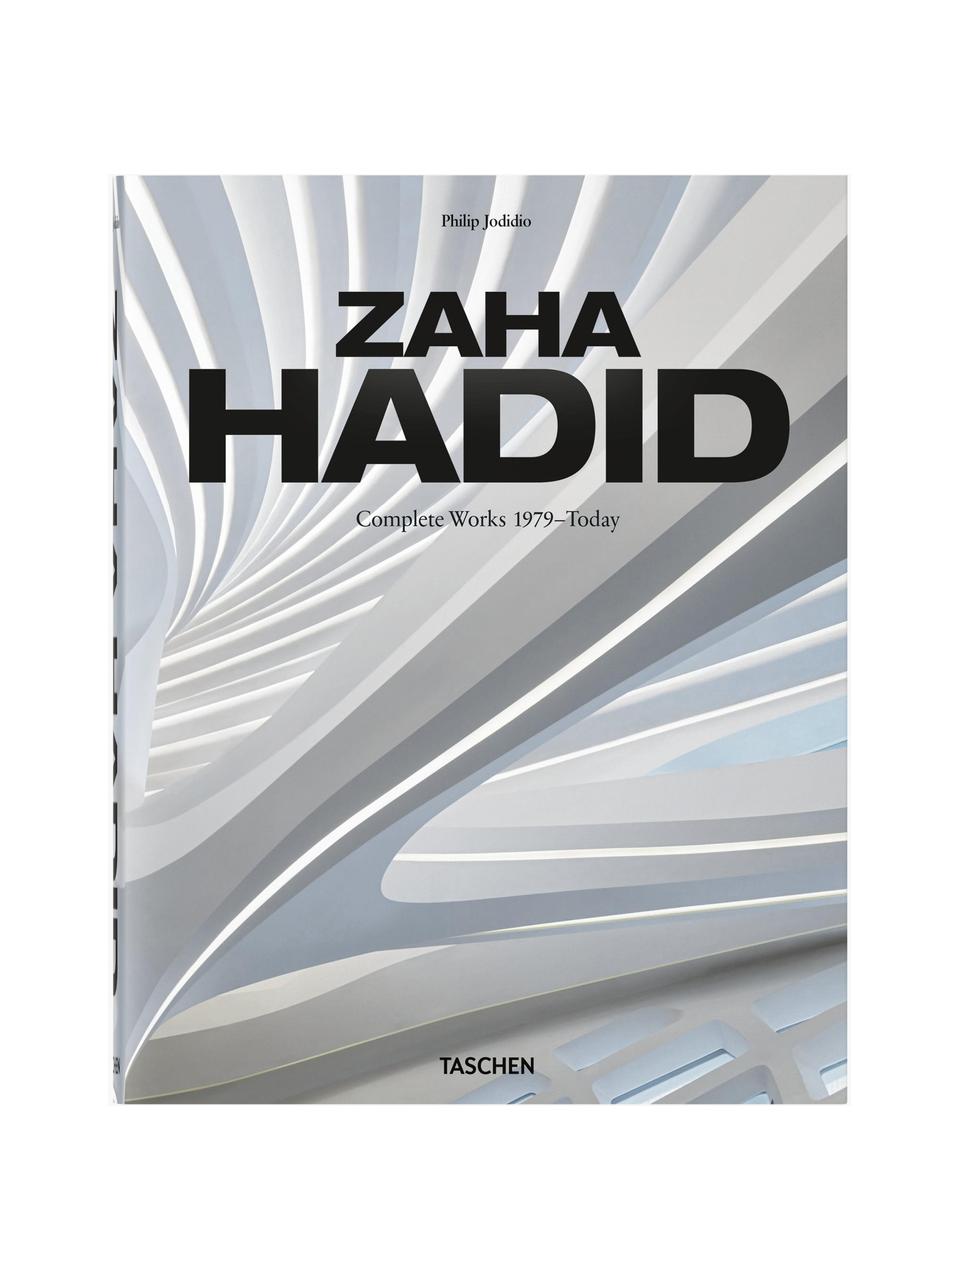 Album Zaha Hadid: Complete Works. 1979 - today, Papier, twarda okładka, Zaha Hadid. Complete Works. 1979 - today, S 23 x D 29 cm